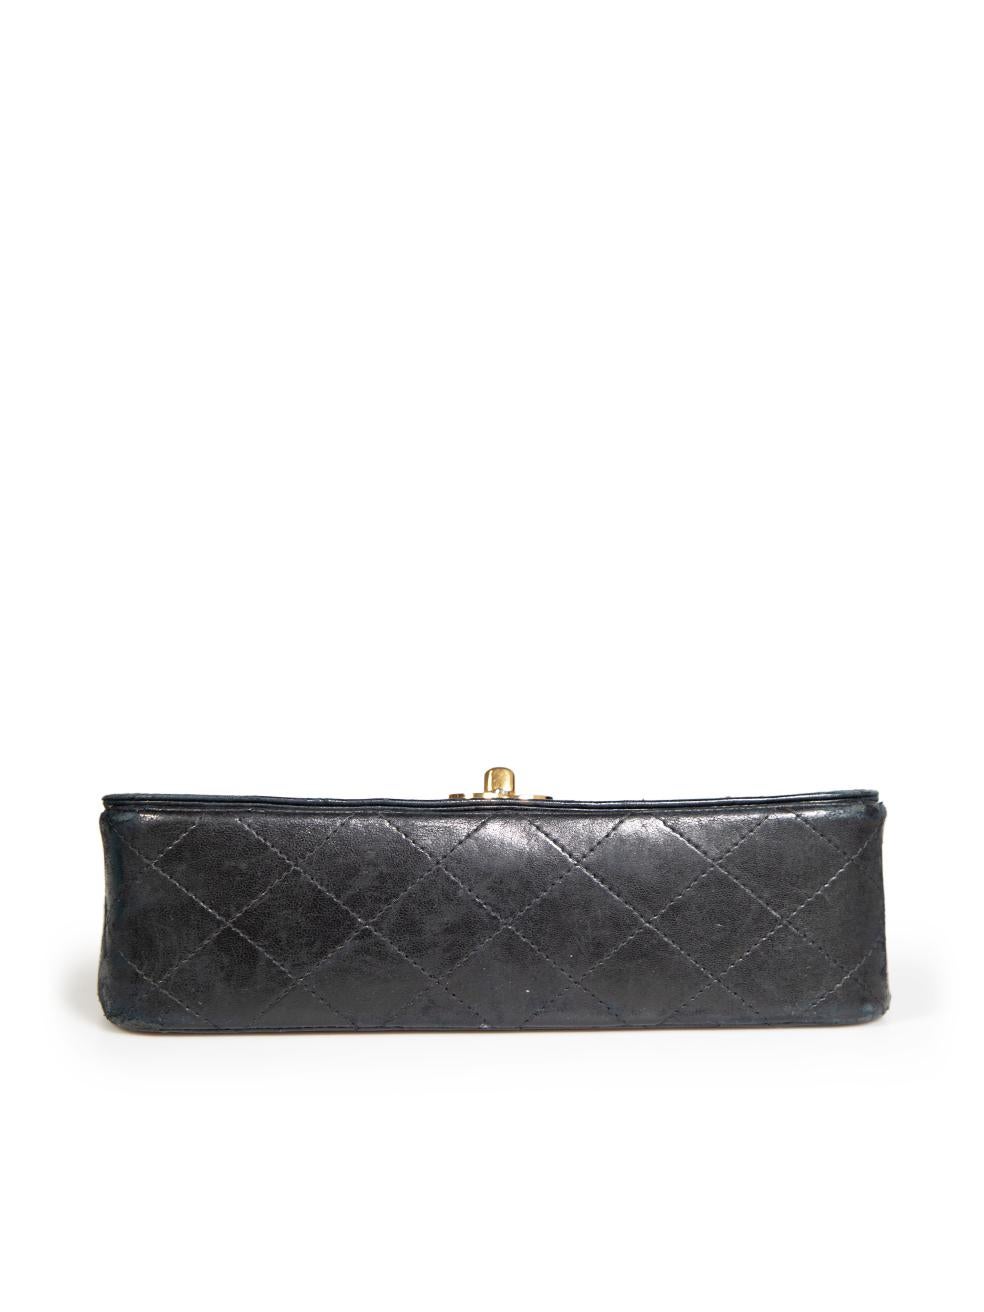 Chanel Vintage Black Lambskin Quilted Flap Bag For Sale 1